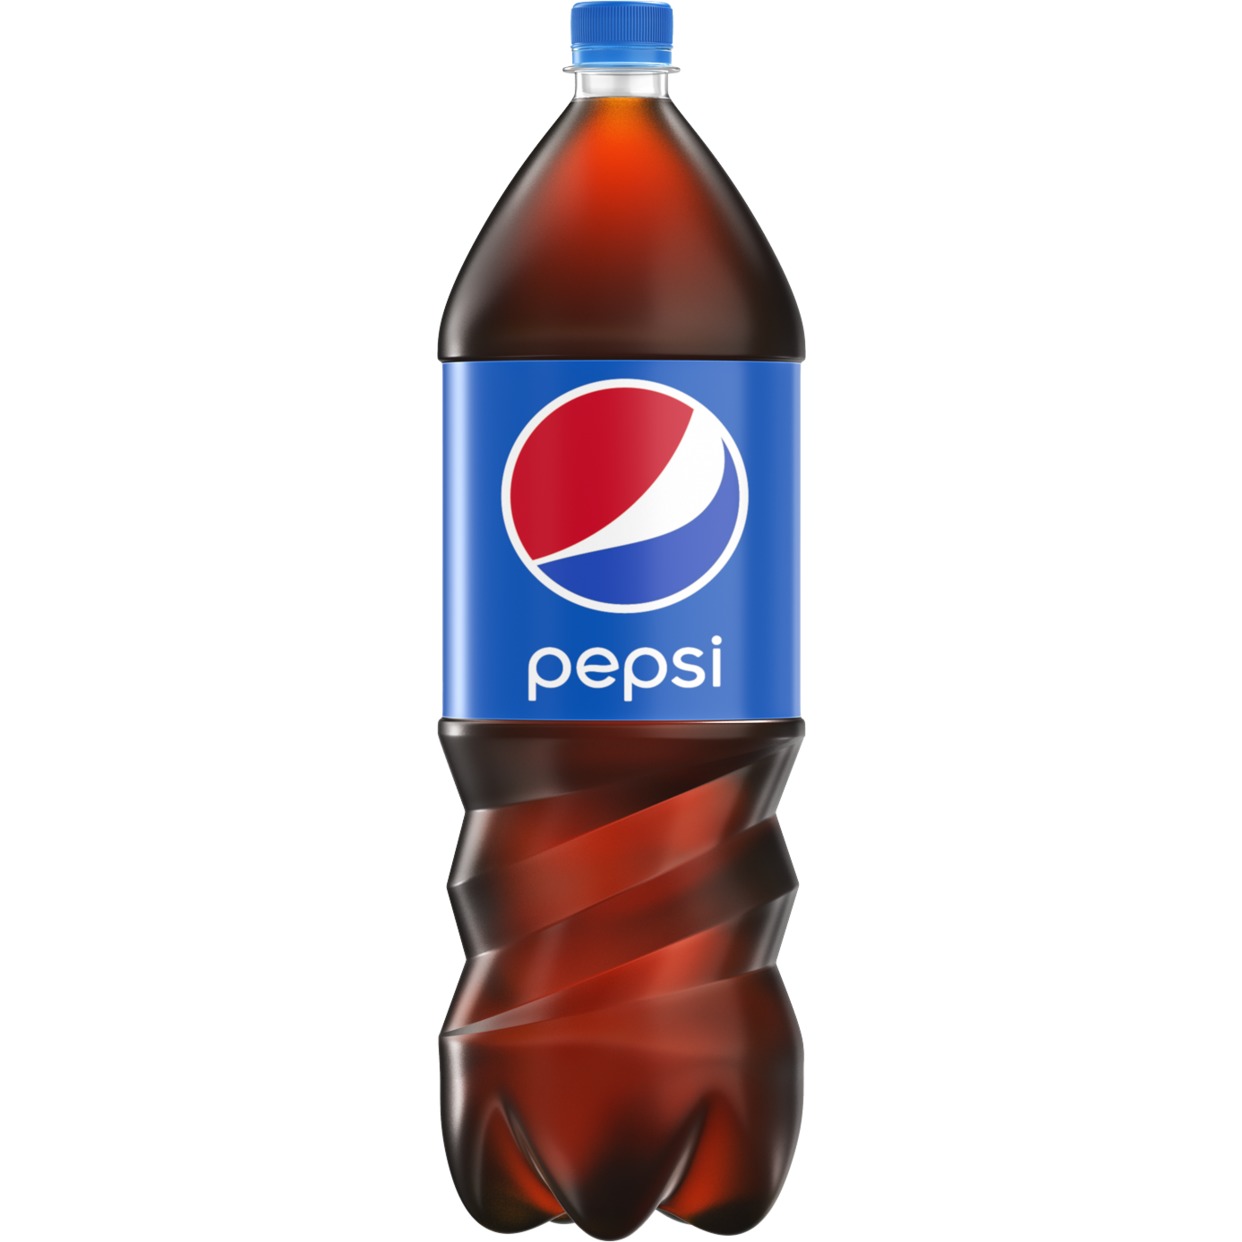 Напиток Pepsi, 2 л по акции в Пятерочке